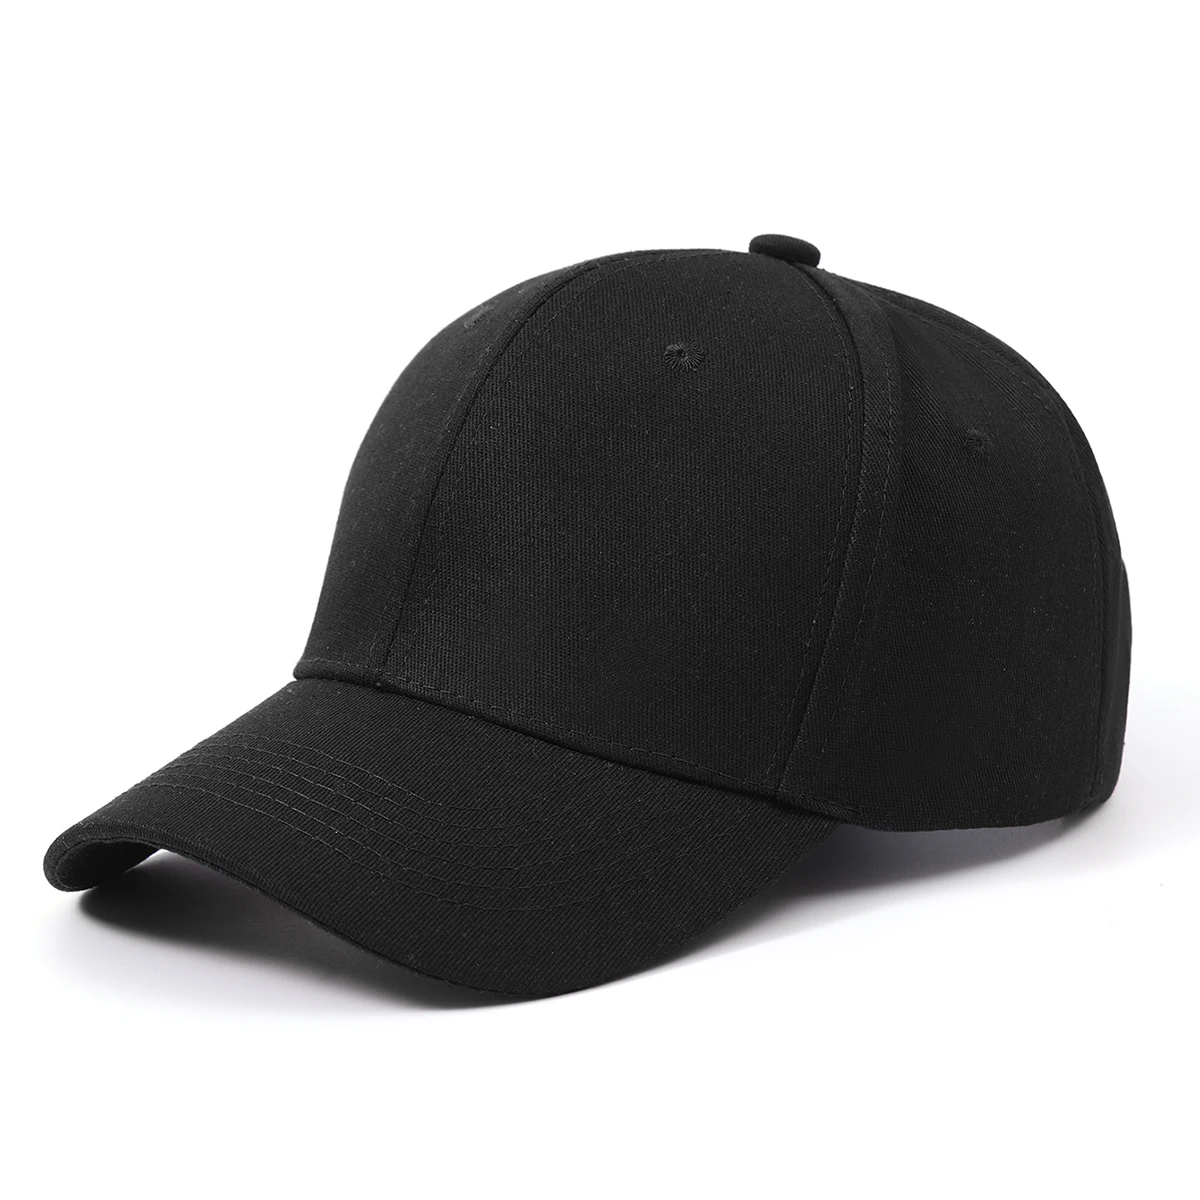 

Black Cotton Cap Solid Color Baseball Cap Snapback Casquette Hats Fitted Casual Gorras Hip Hop Dad Hats For Men Women Unisex